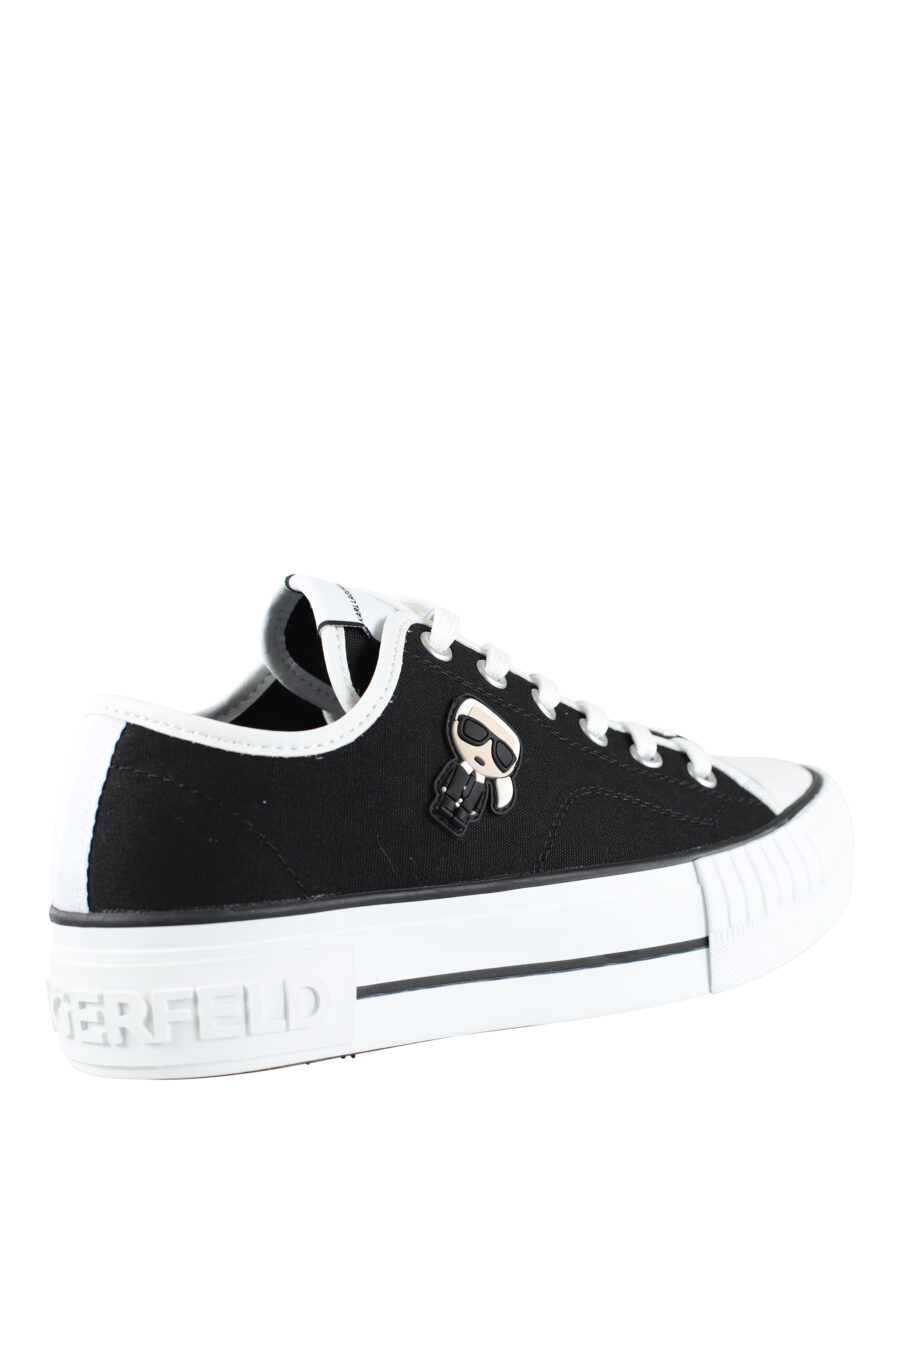 Zapatillas negras estilo converse con logo "karl" en goma - IMG 9577